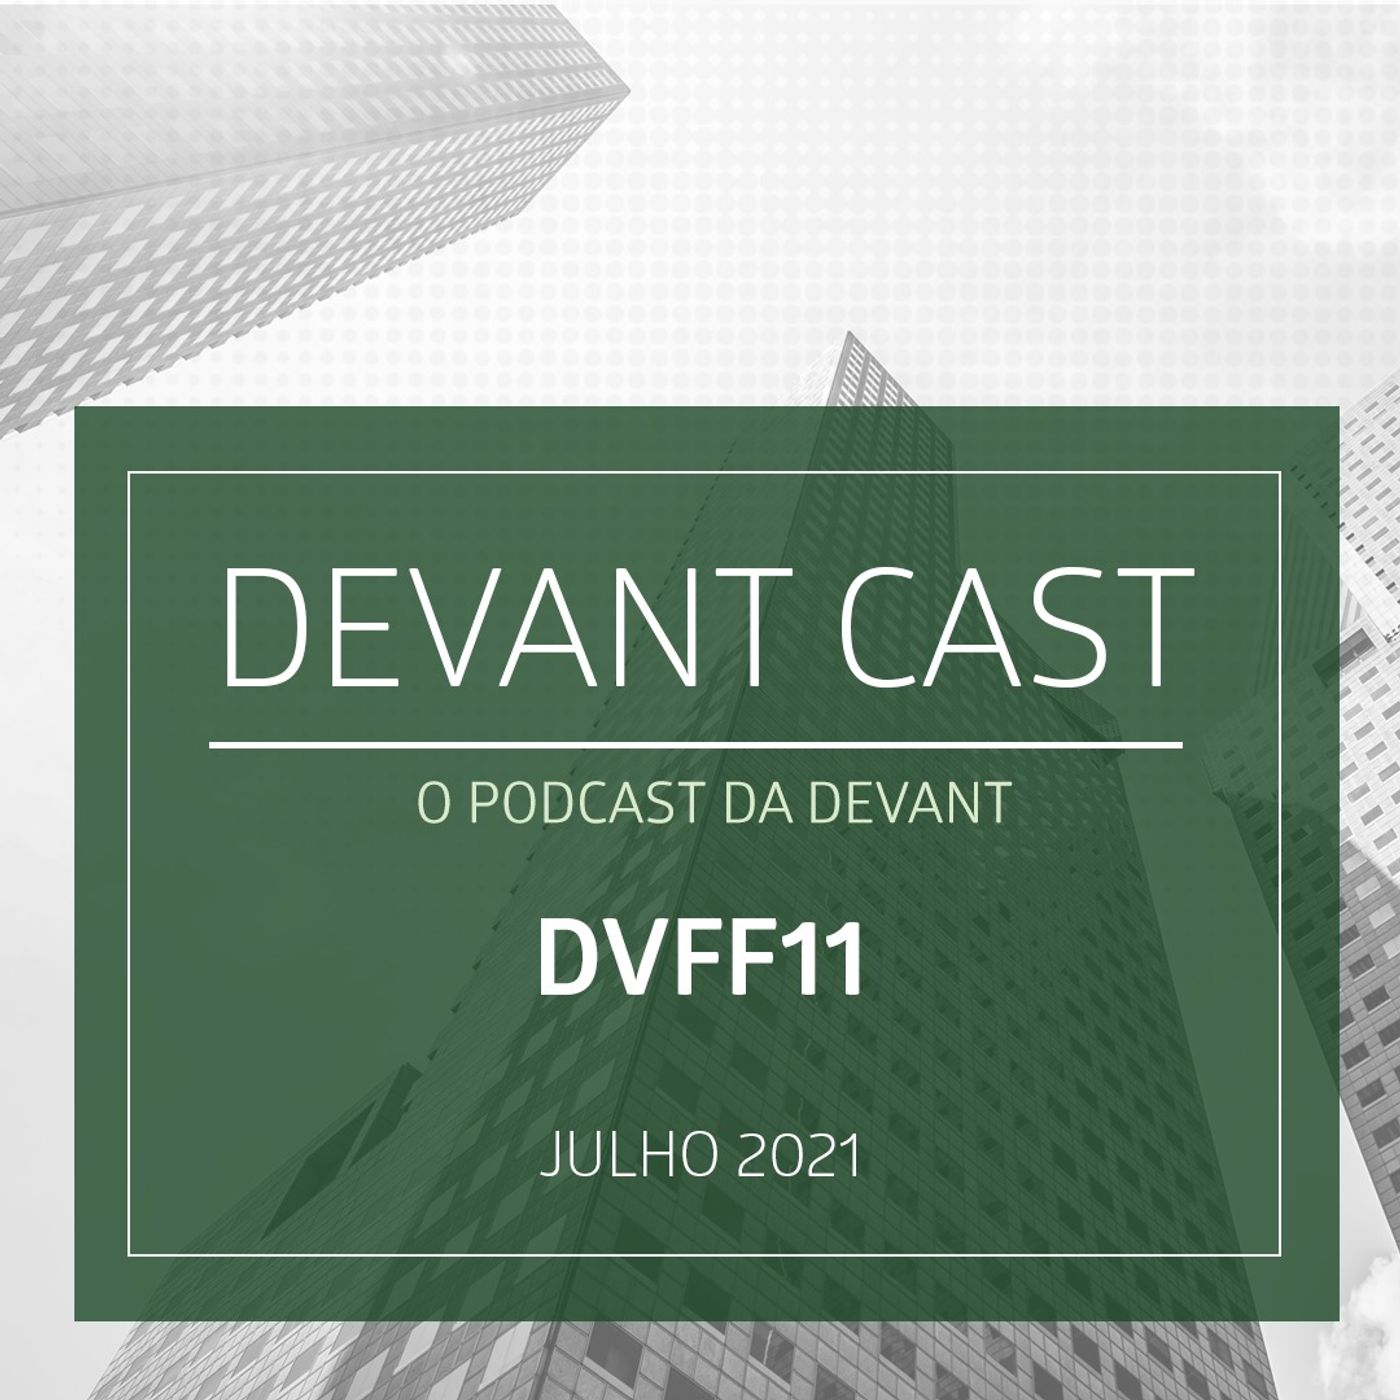 DVFF11 | Jul 21